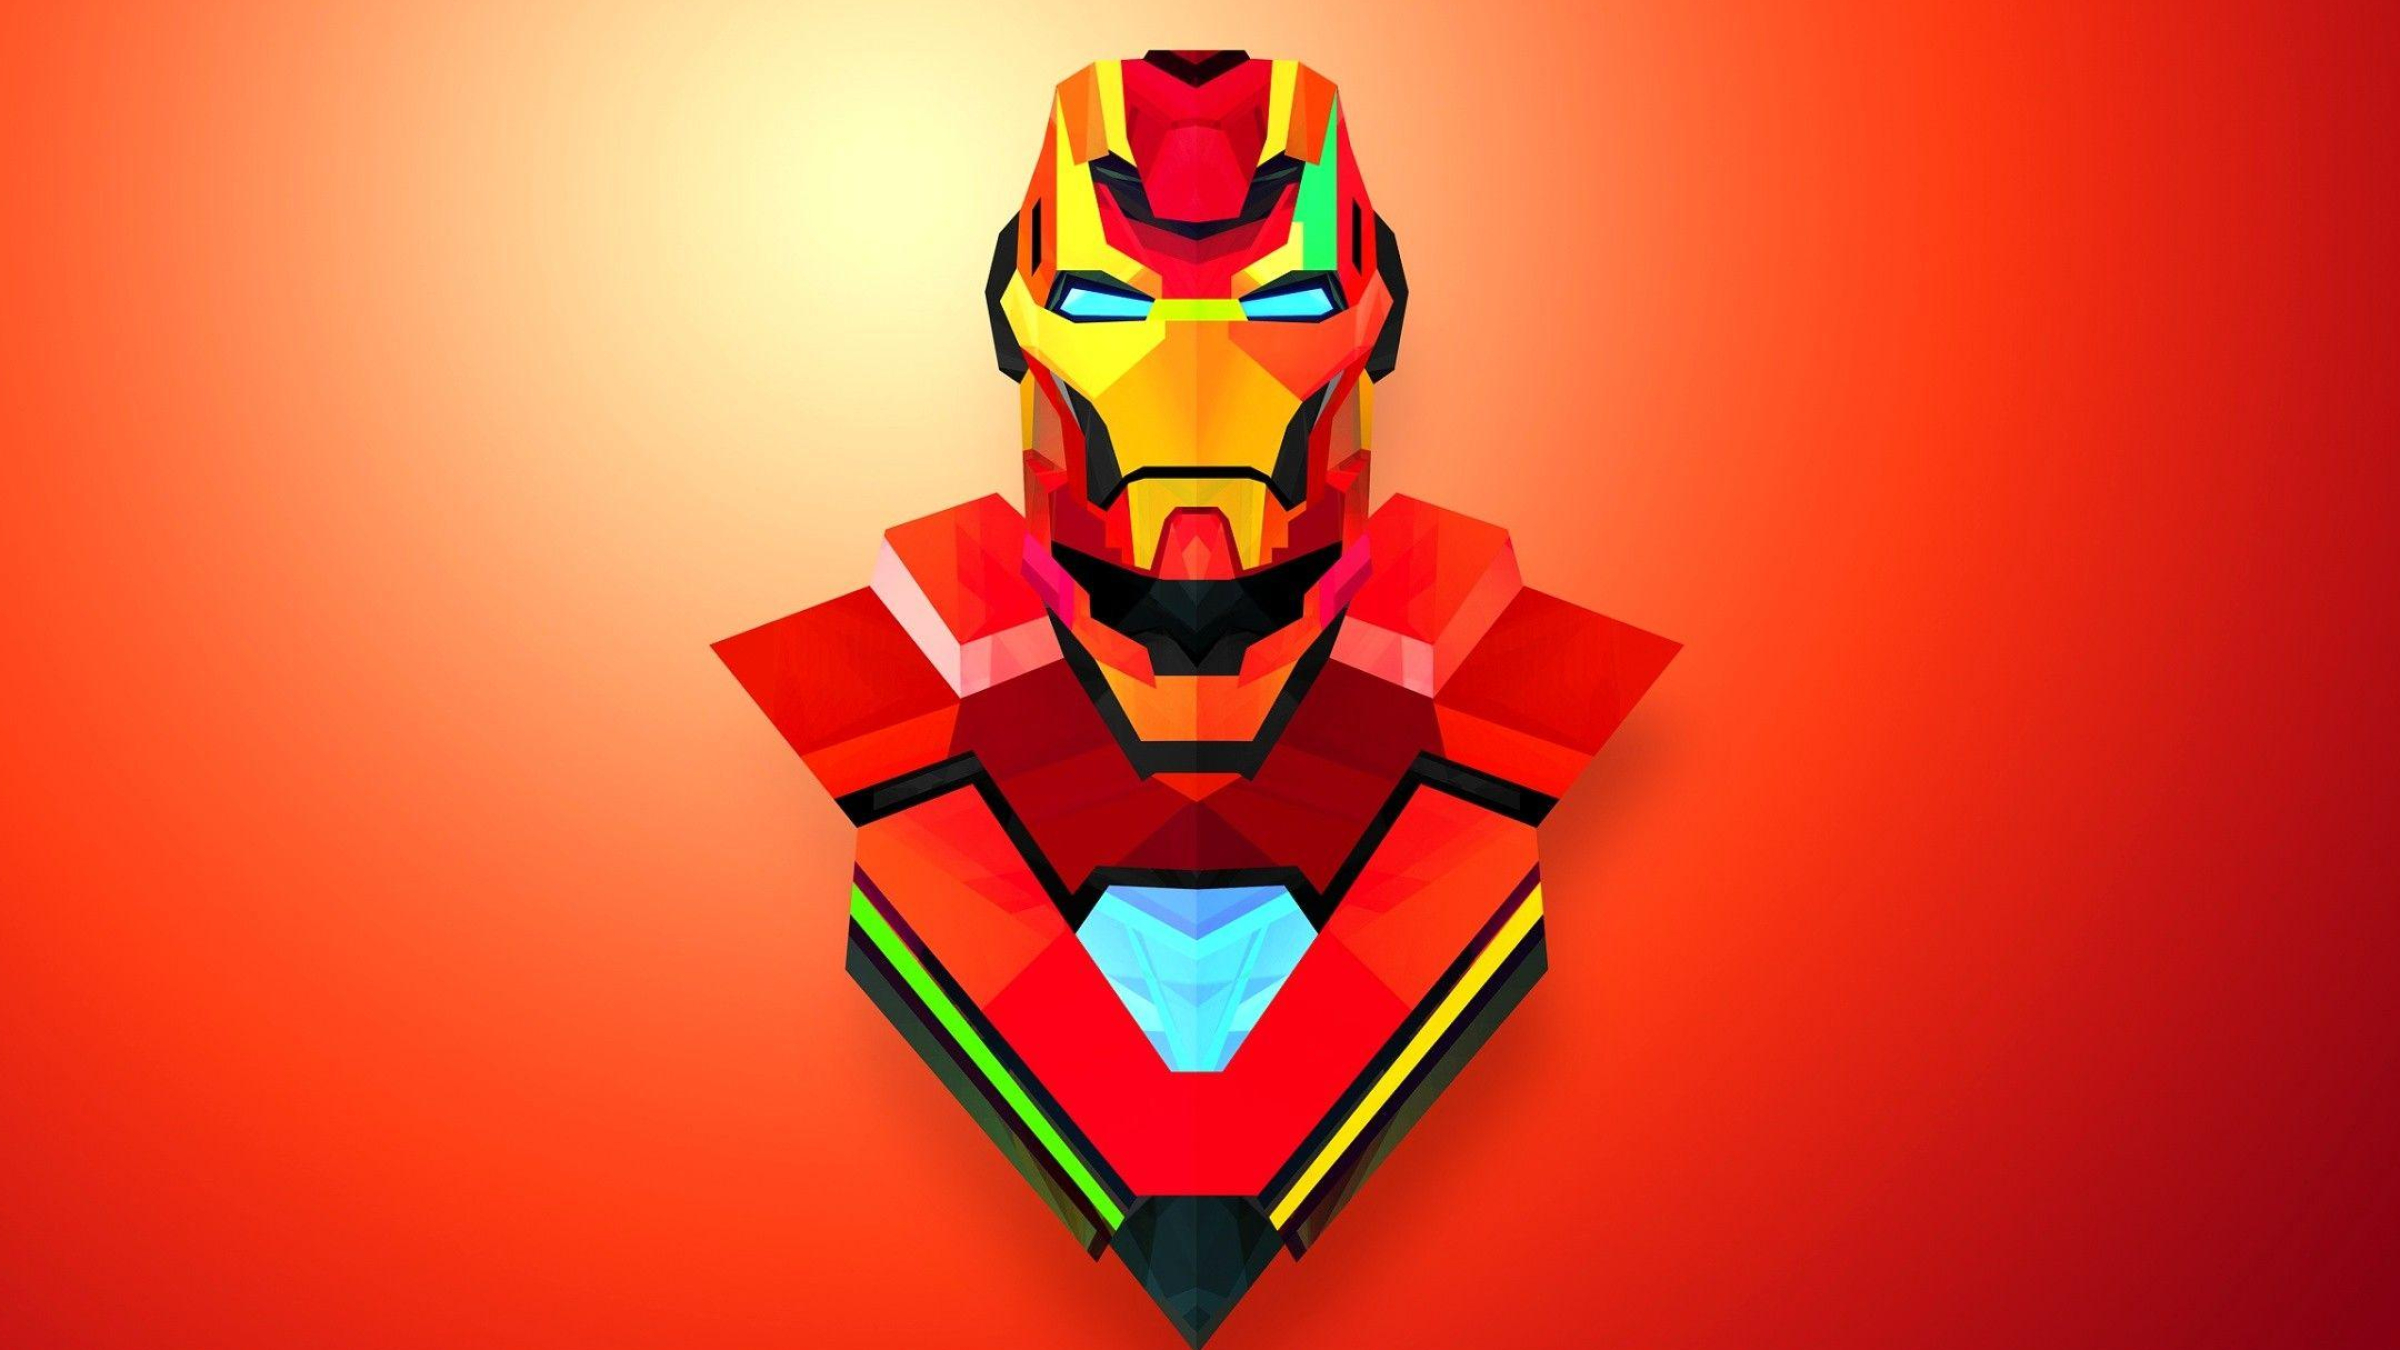 2400x1350 Iron Man Vector Wallpapers Top Free Iron Man Vector Backgrounds